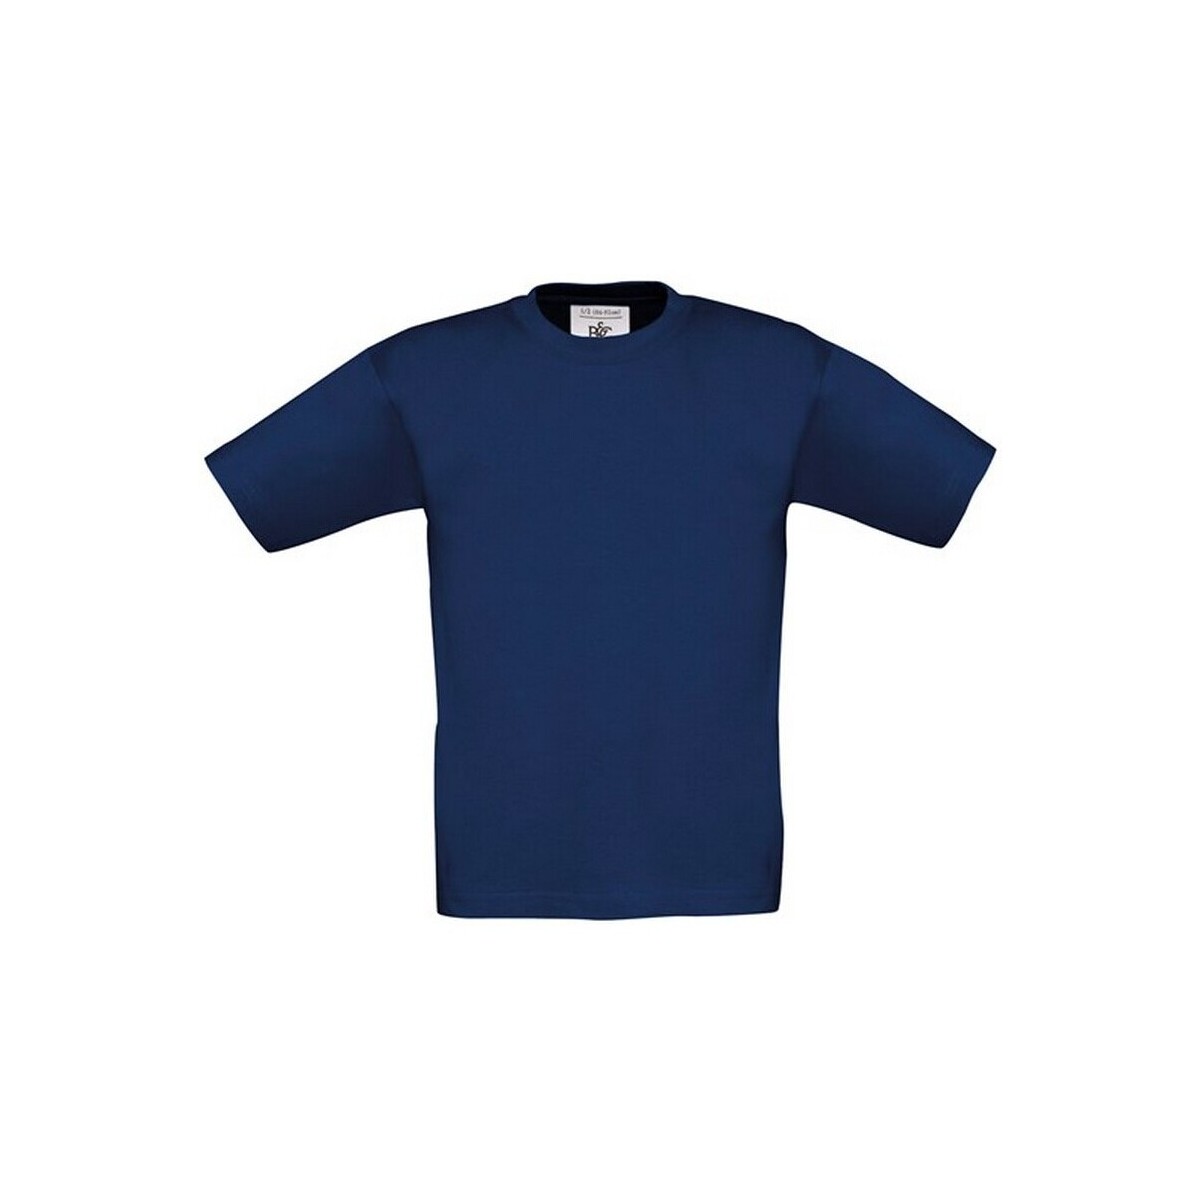 textil Niños Camisetas manga corta B&c Exact 150 Azul